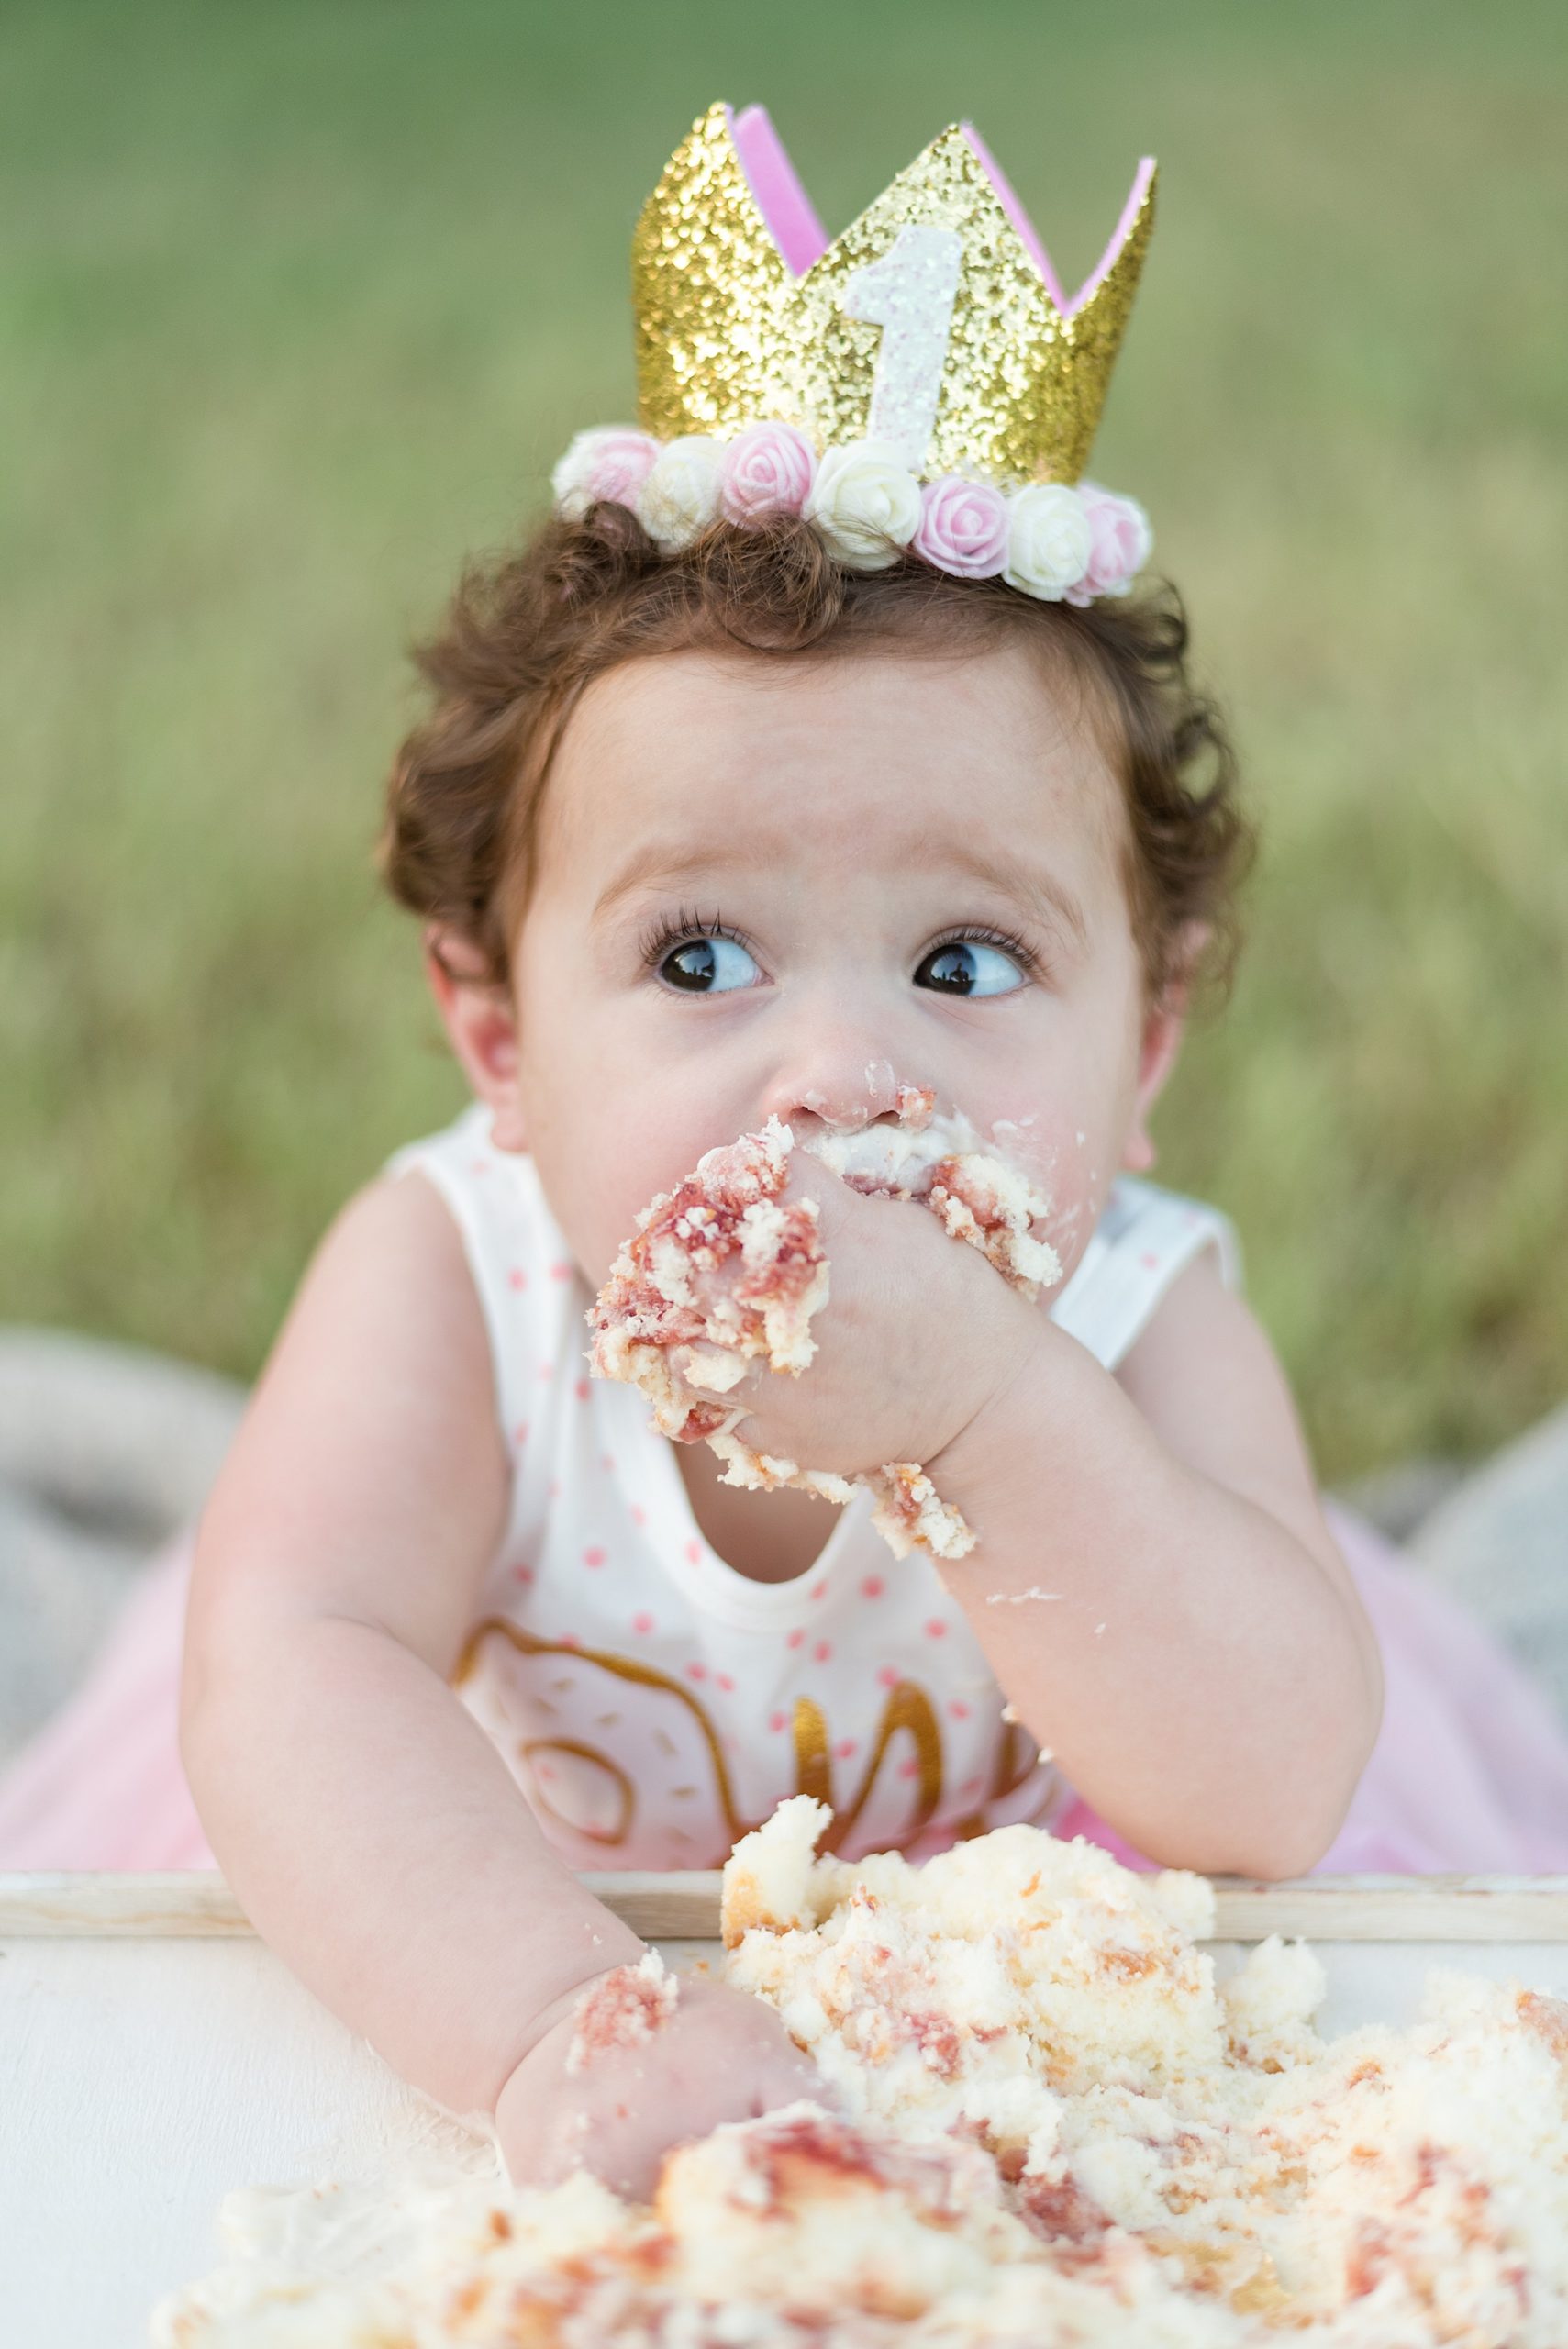 Birthday Girl Smashes her cake during Plano TX Photos